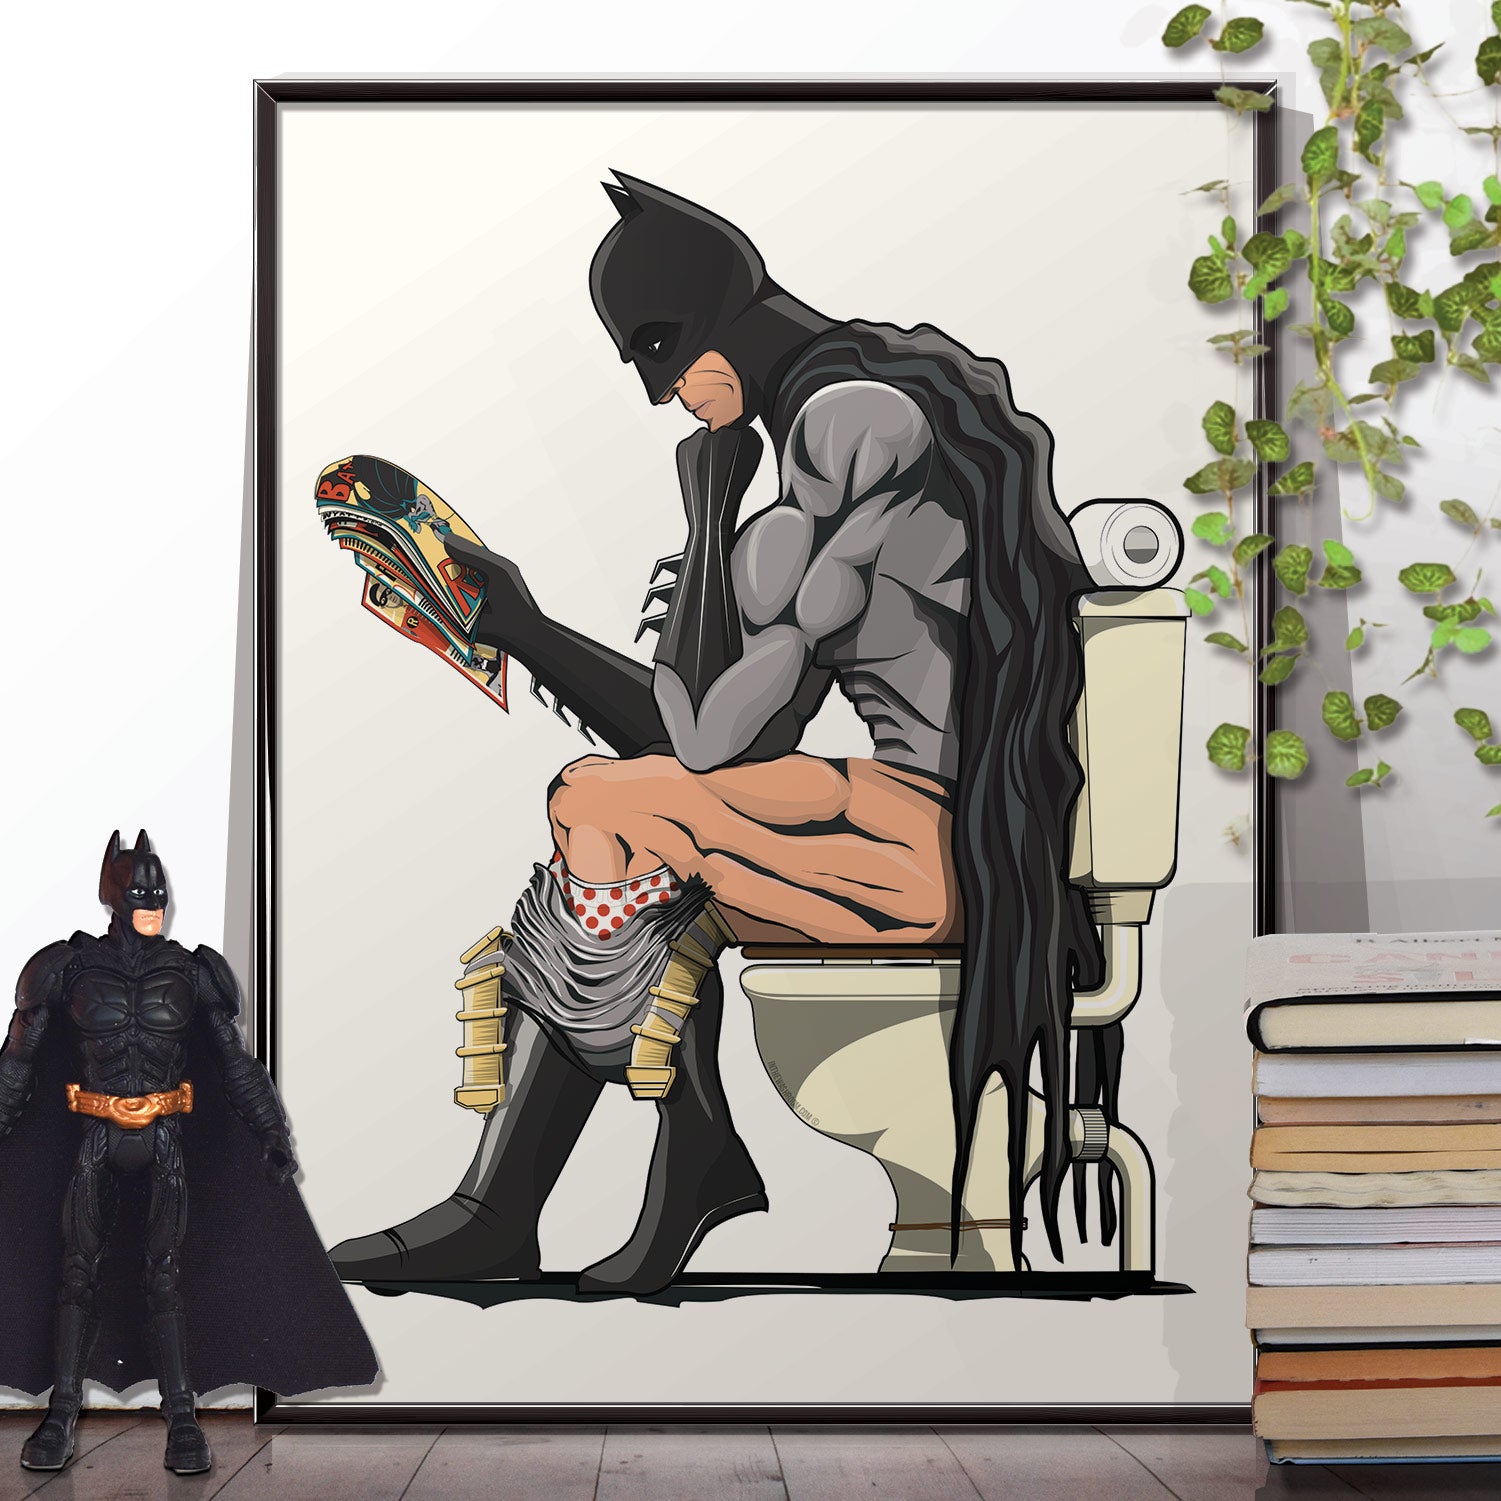 Batman on the Toilet Funny Bathroom Poster 